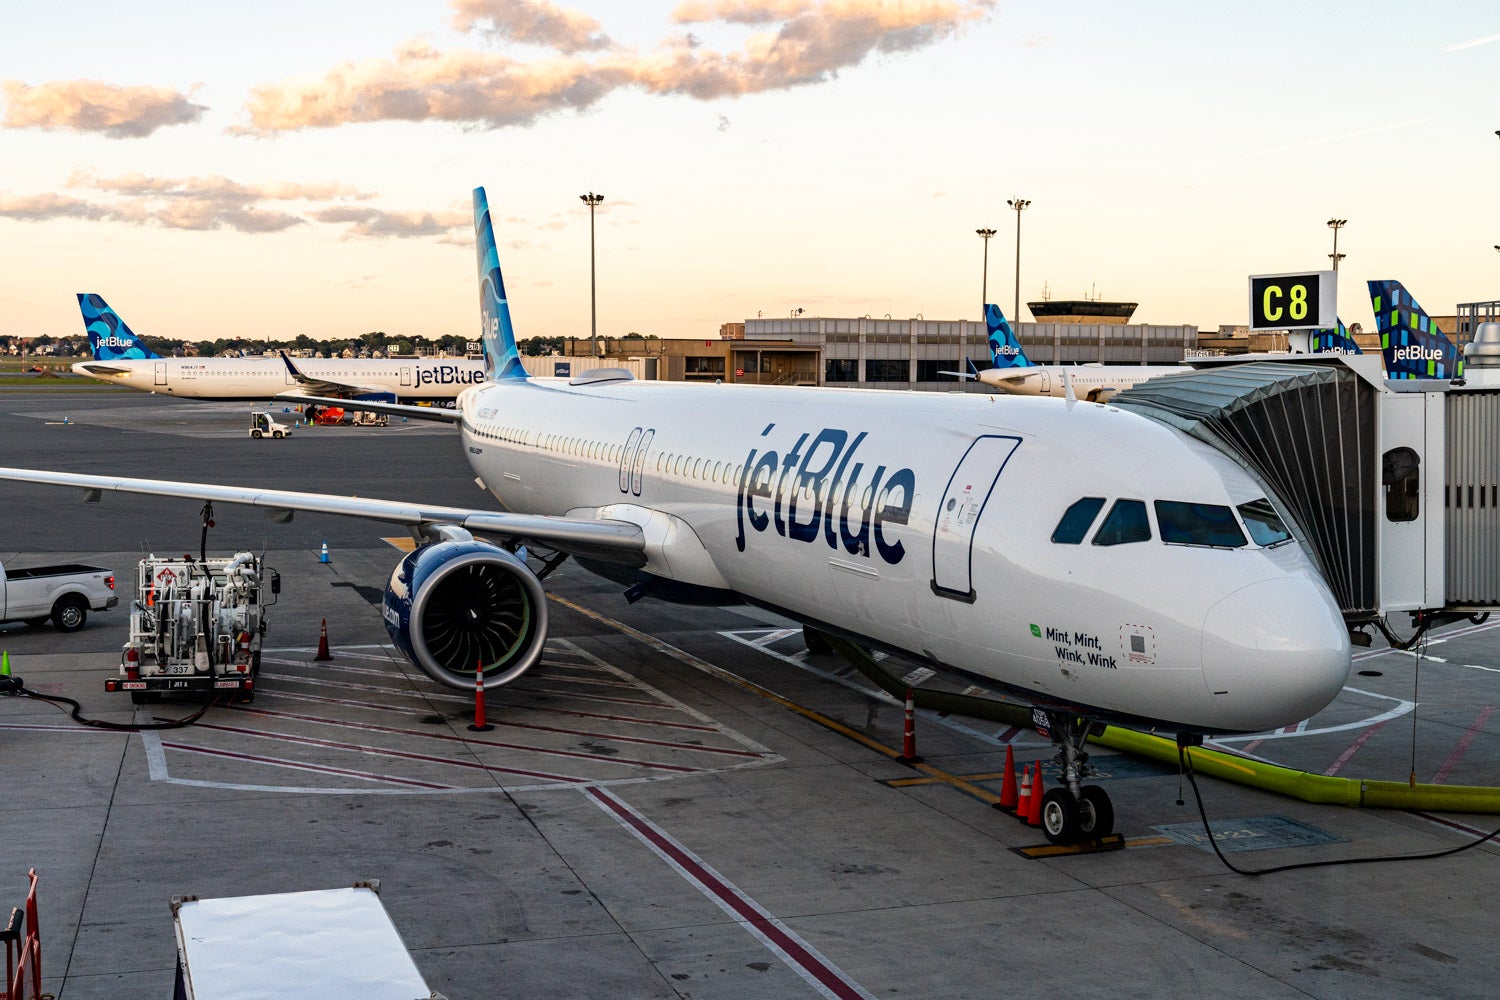 JetBlue appears to eye Lisbon as its next European destination